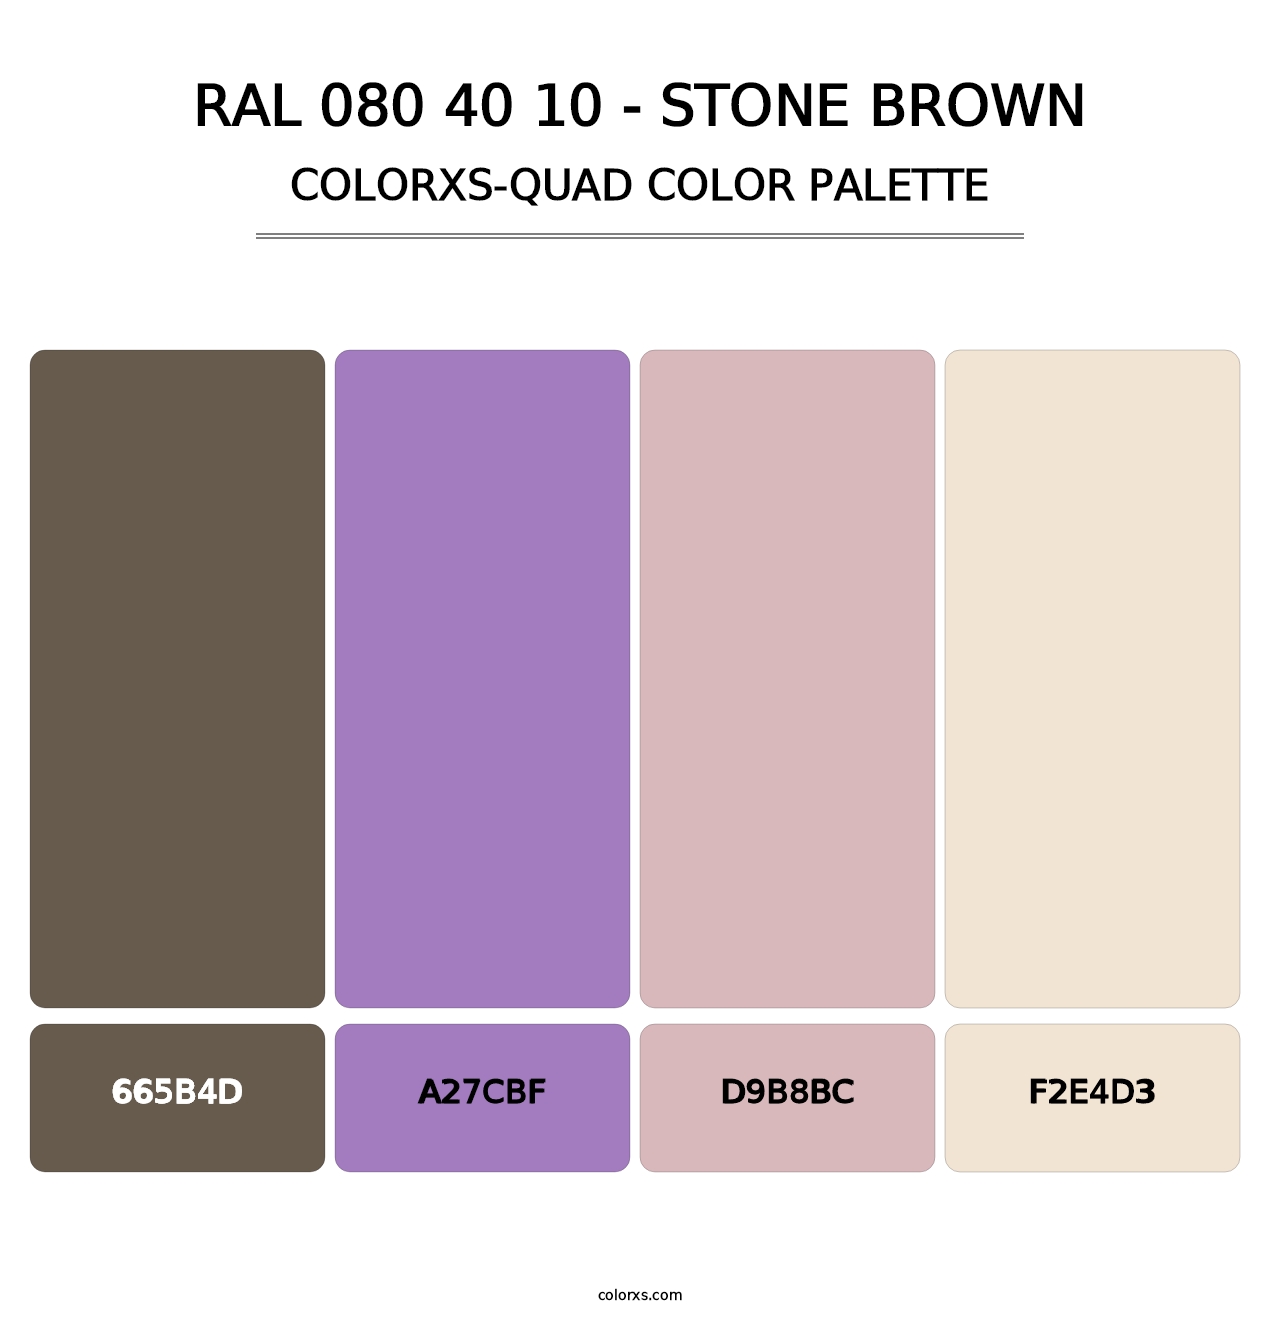 RAL 080 40 10 - Stone Brown - Colorxs Quad Palette